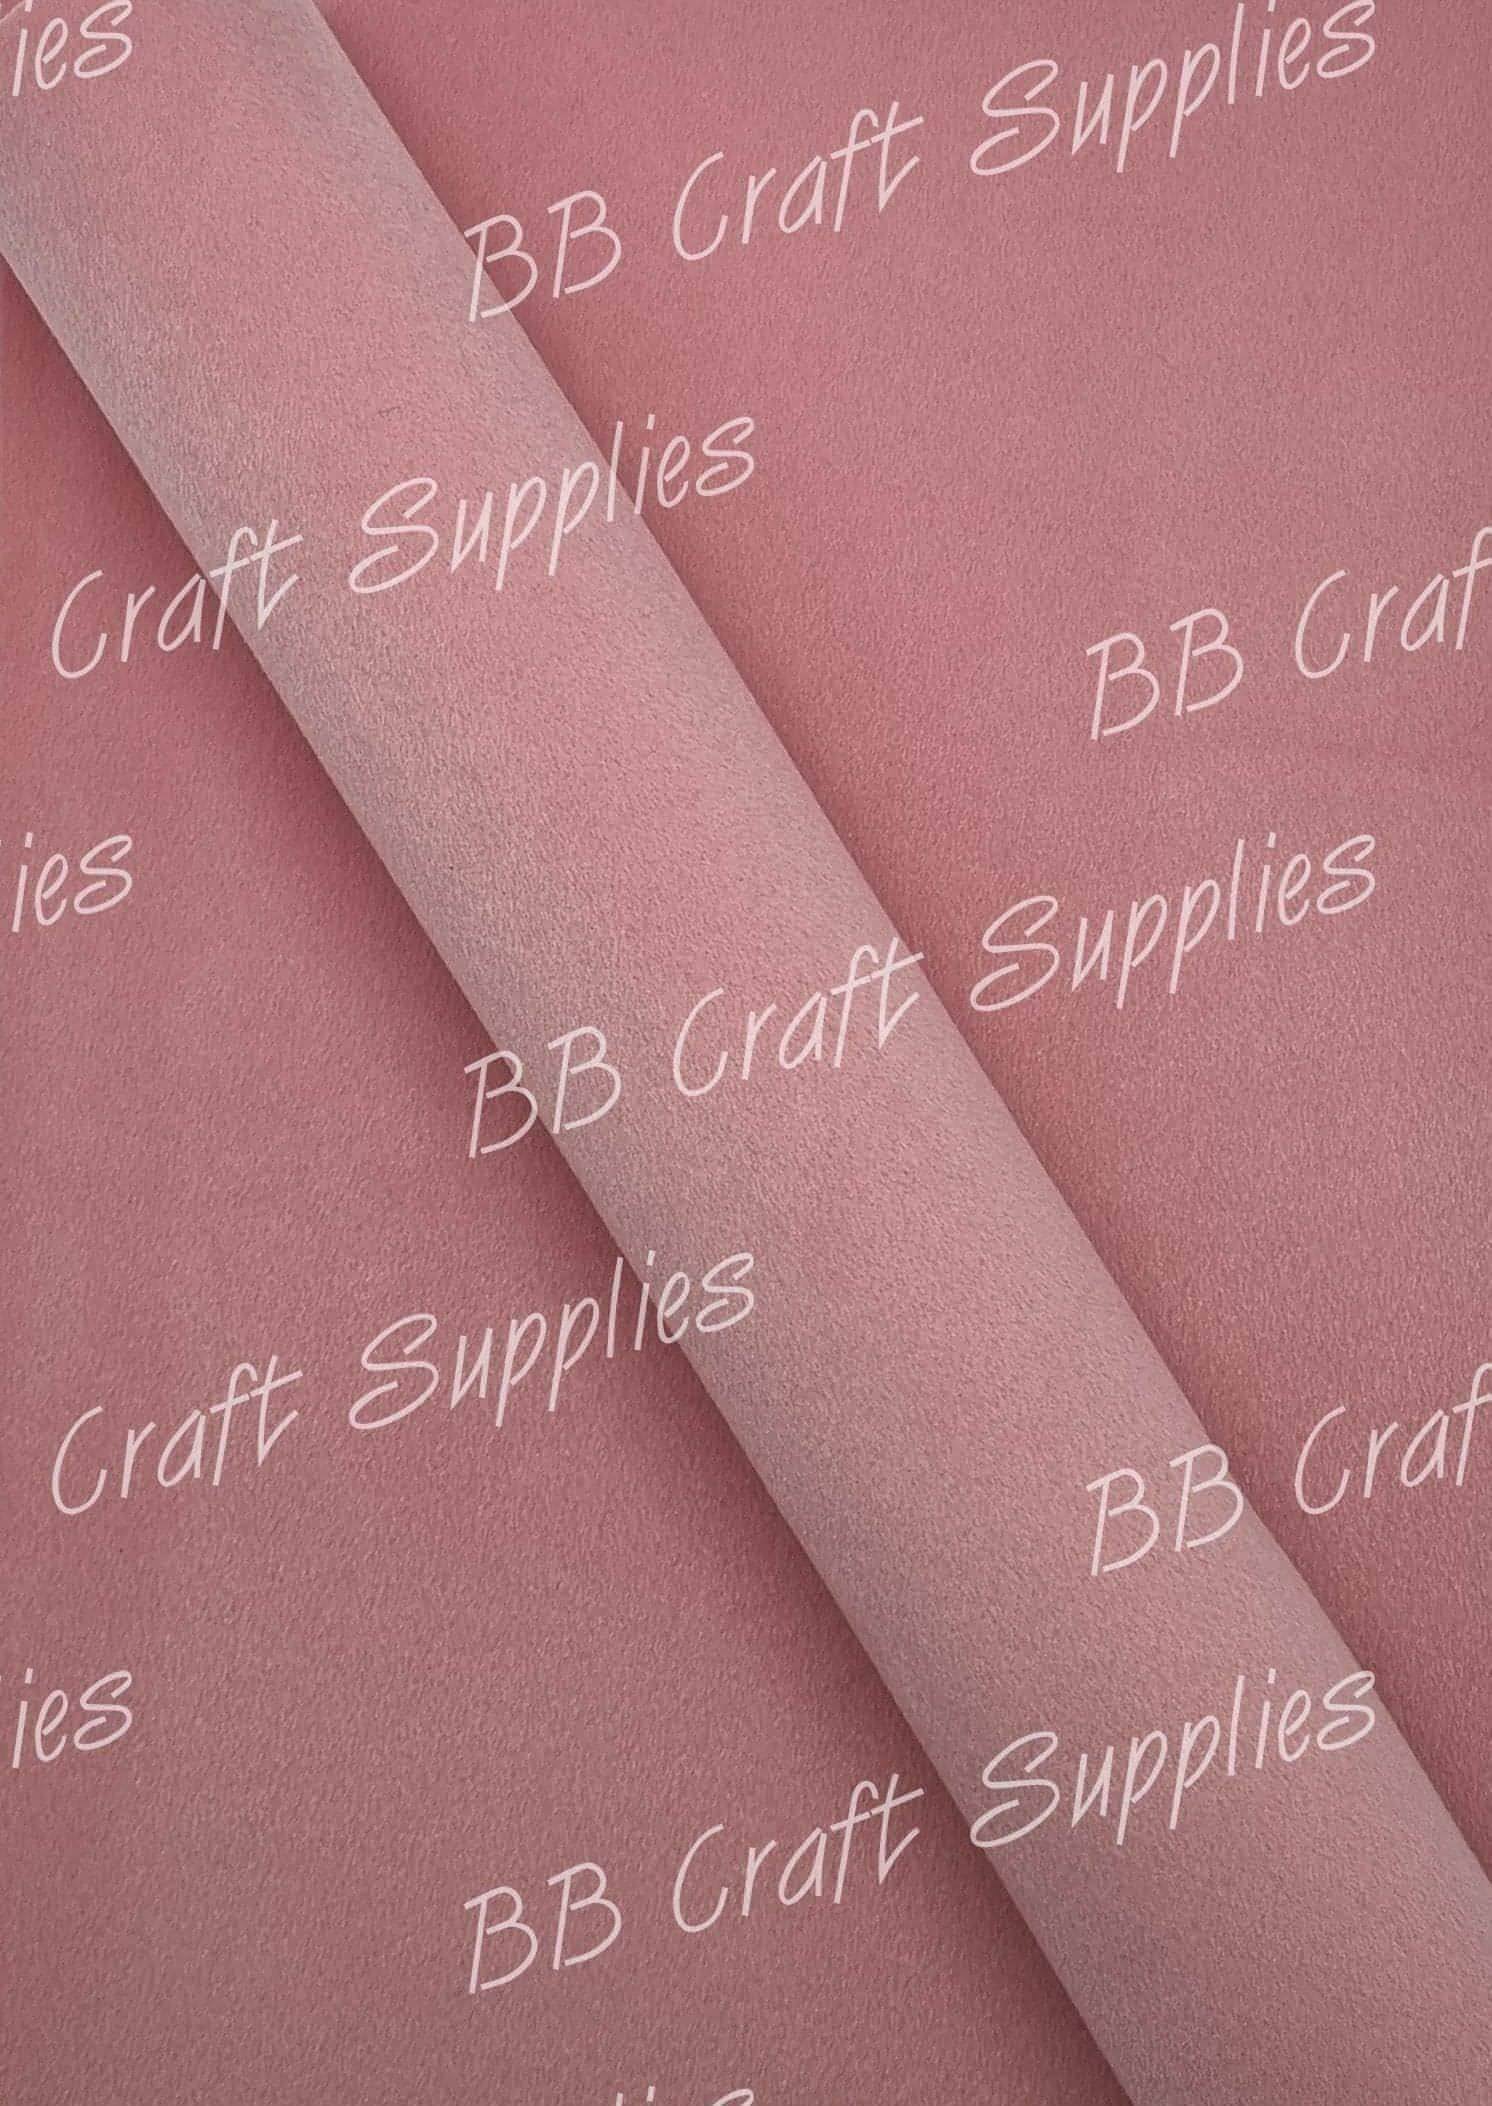 Premium Velvet Fabric - Pink - crushed, soft, velvet - Bare Butler Faux Leather Supplies 